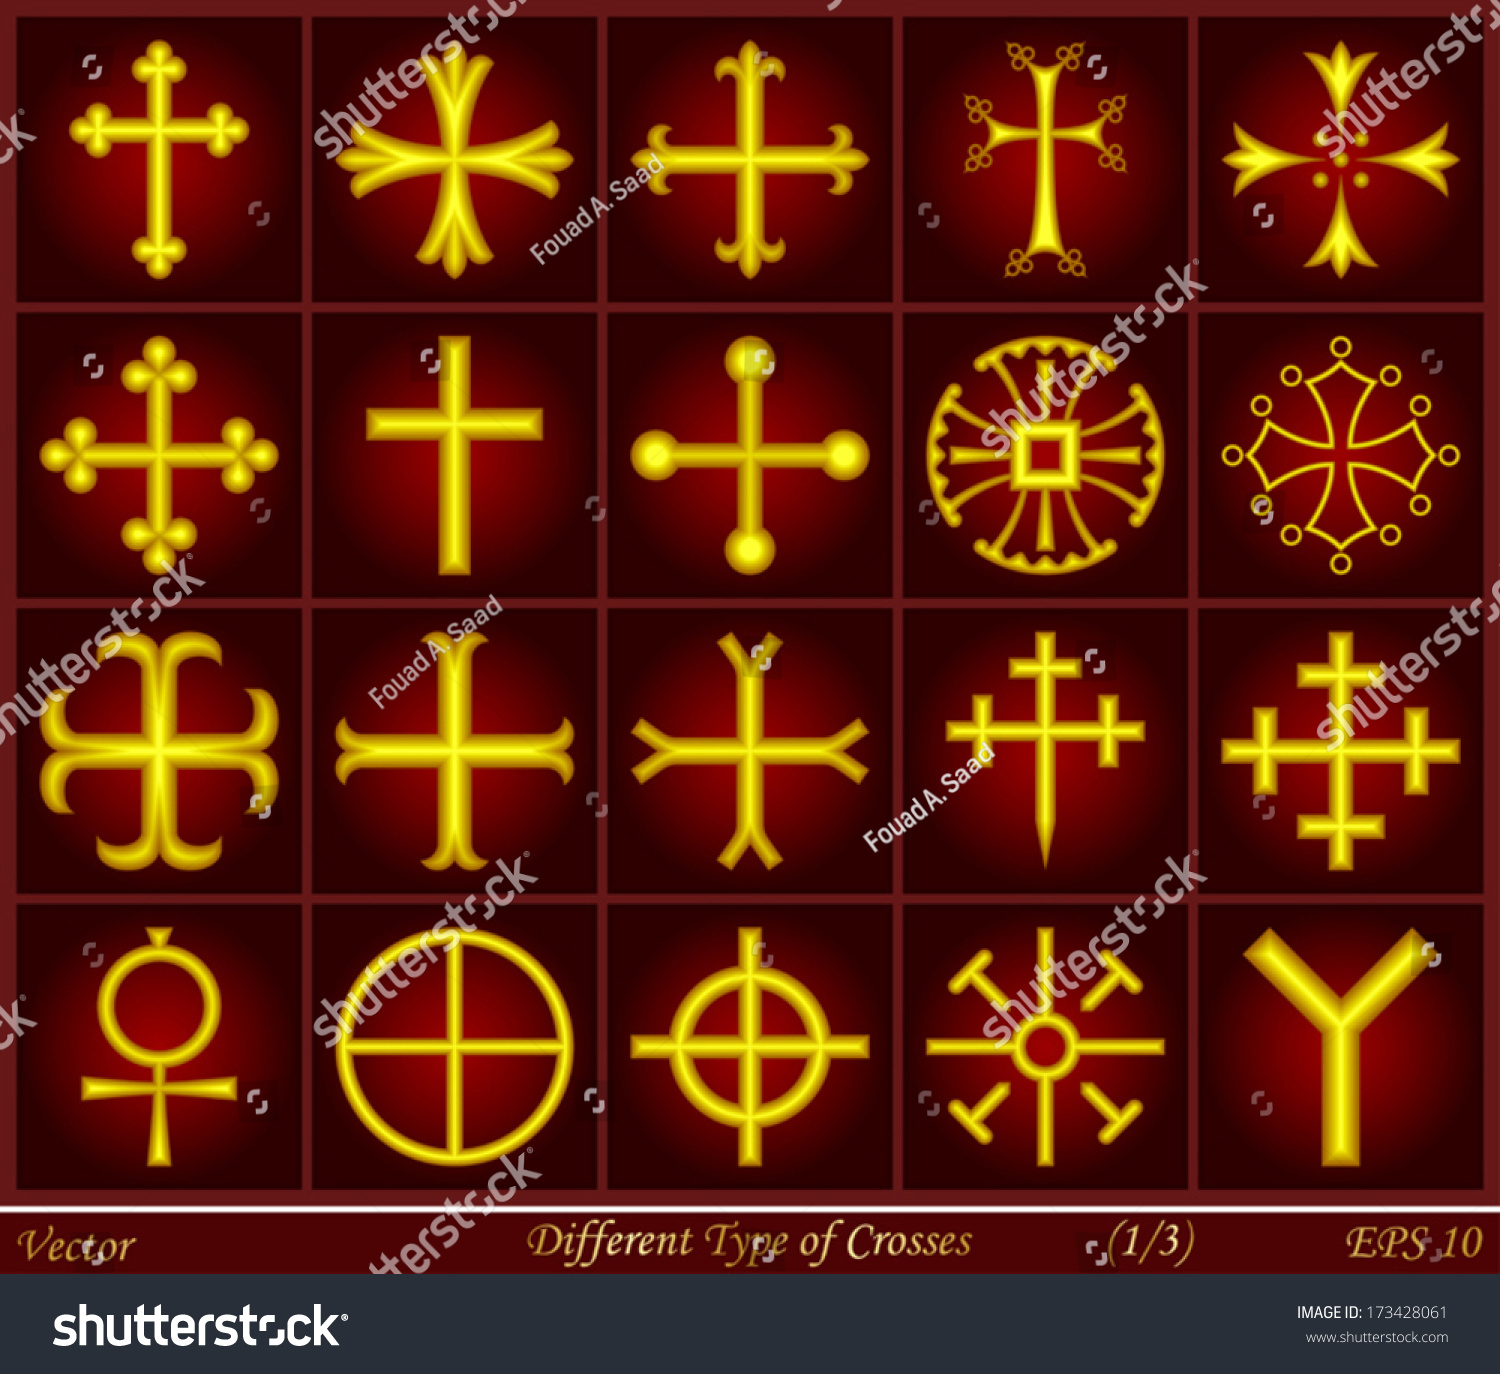 Cross name. Types of Crosses. Лапчатый крест значение. Греческий крест значение. Стальной Огненный крест значение.